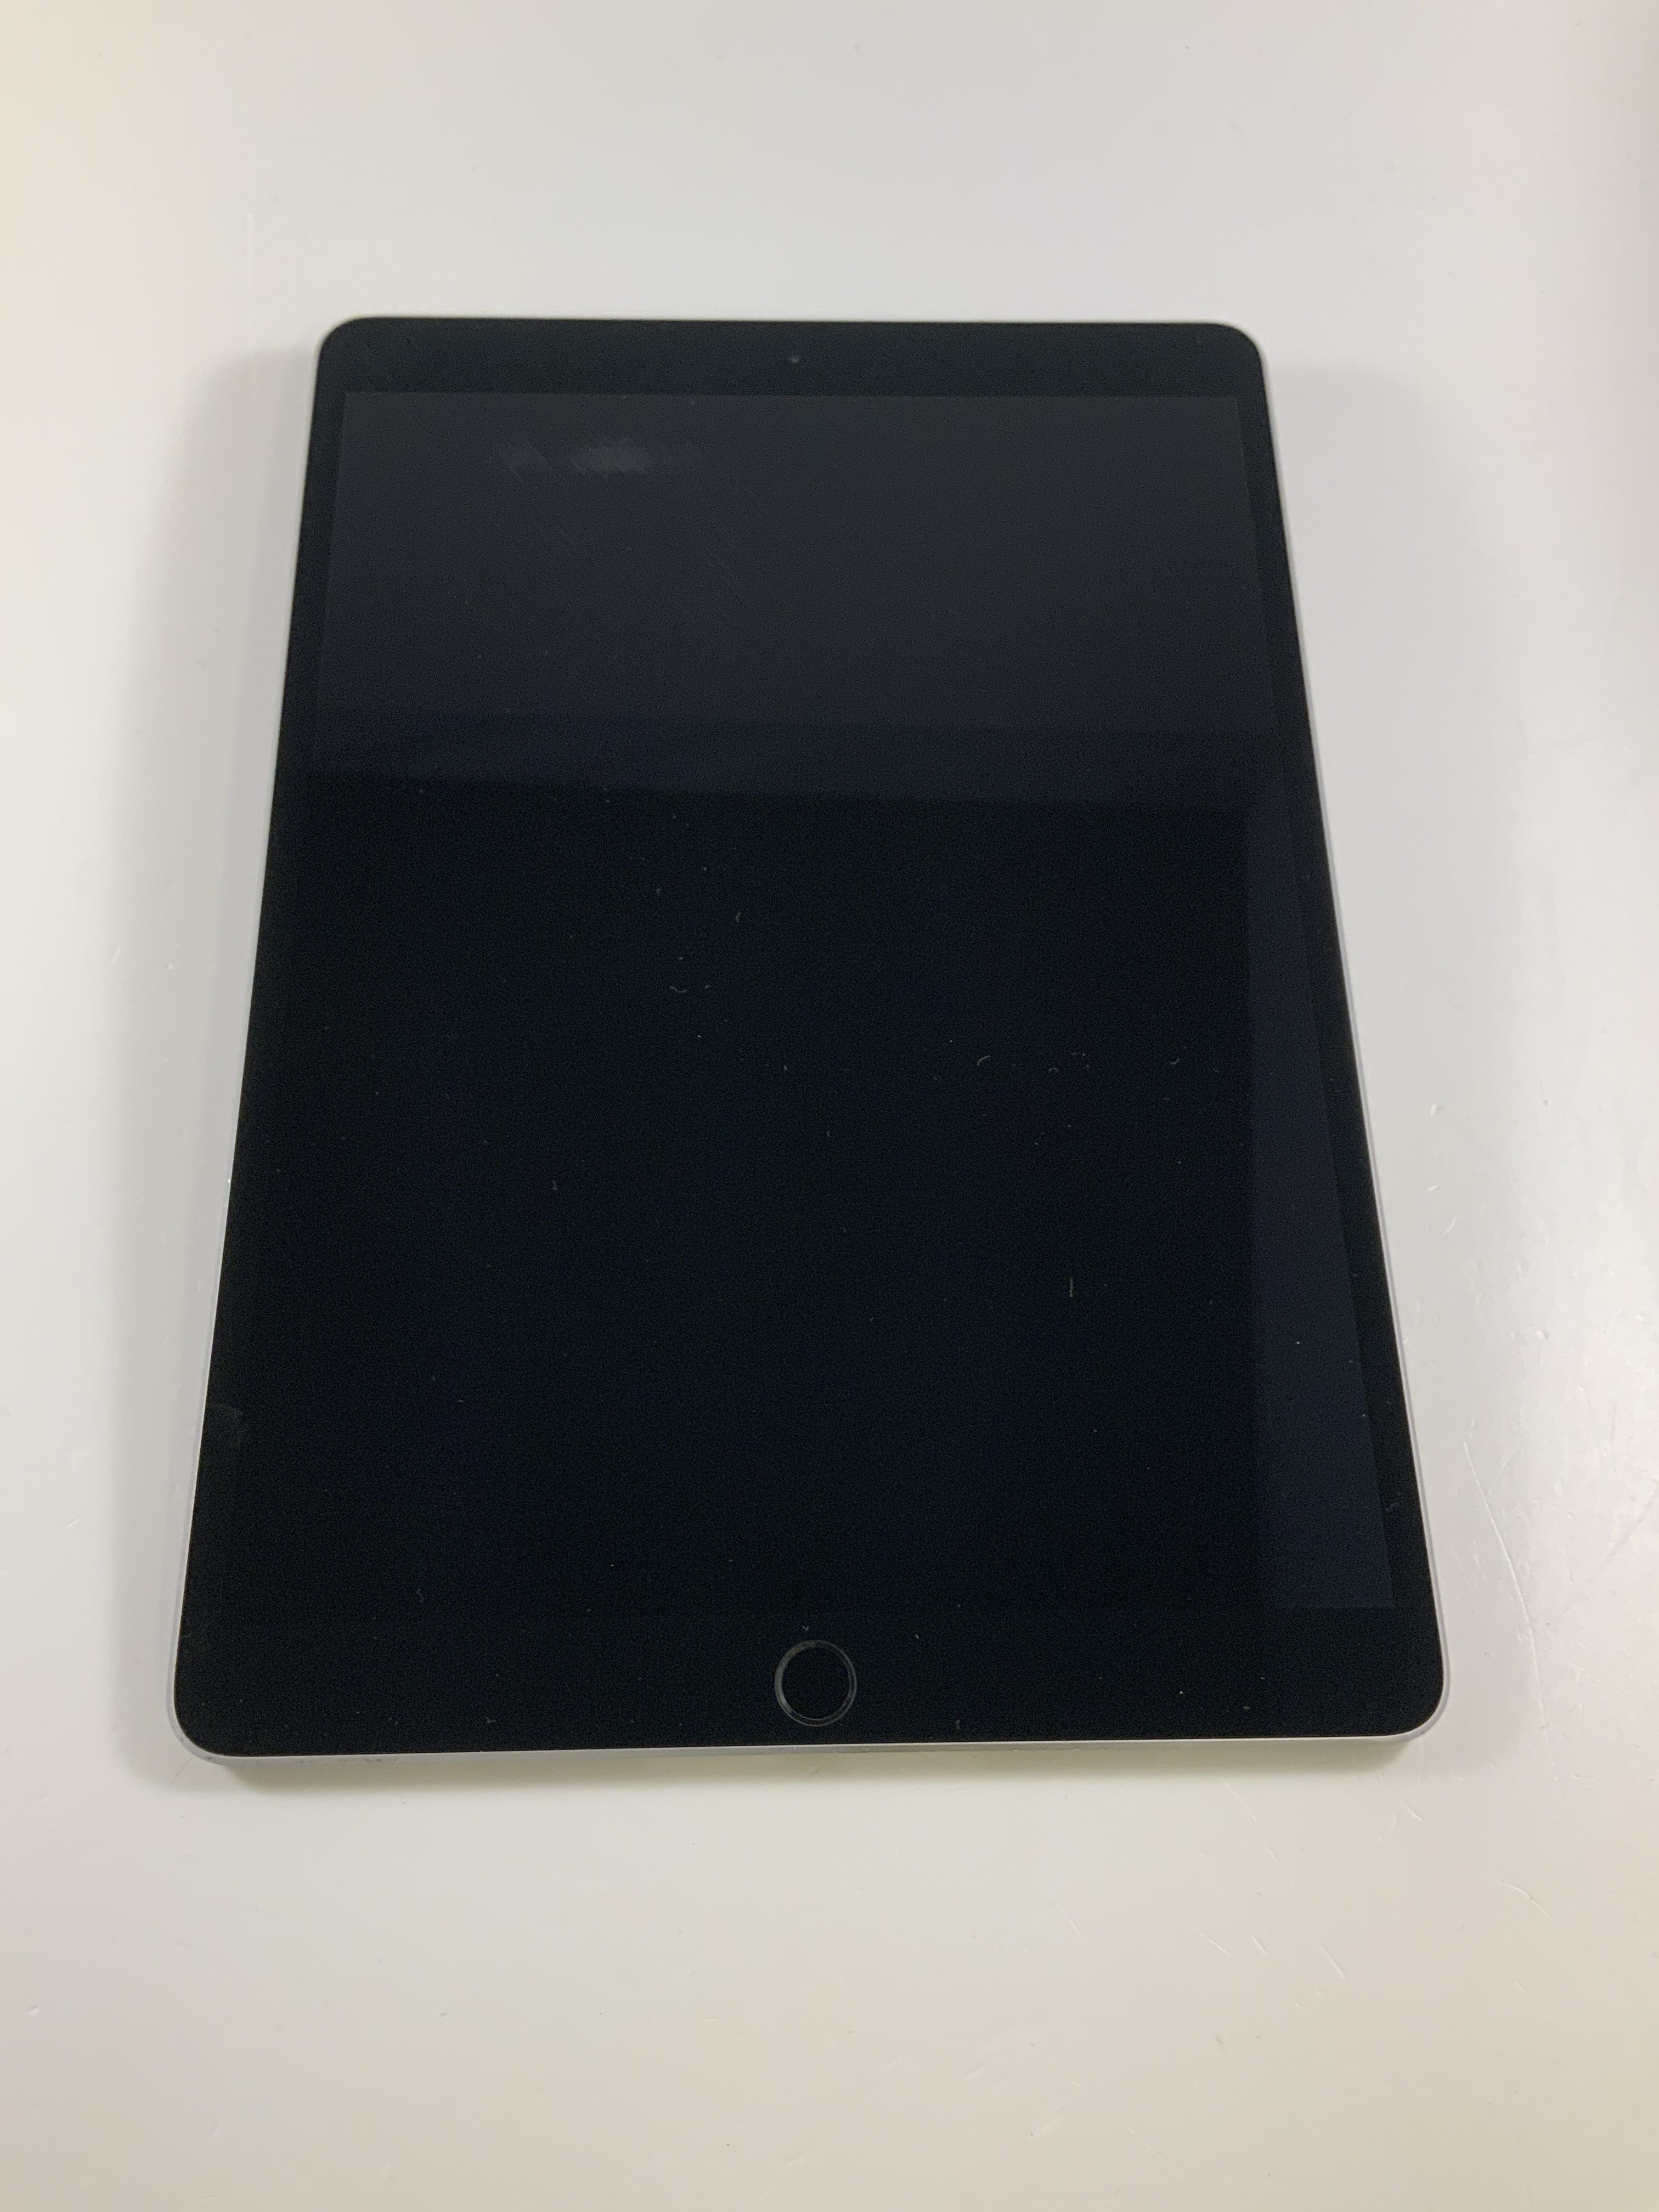 iPad Pro 10.5" Wi-Fi + Cellular 64GB, 64GB, Space Gray, imagen 1